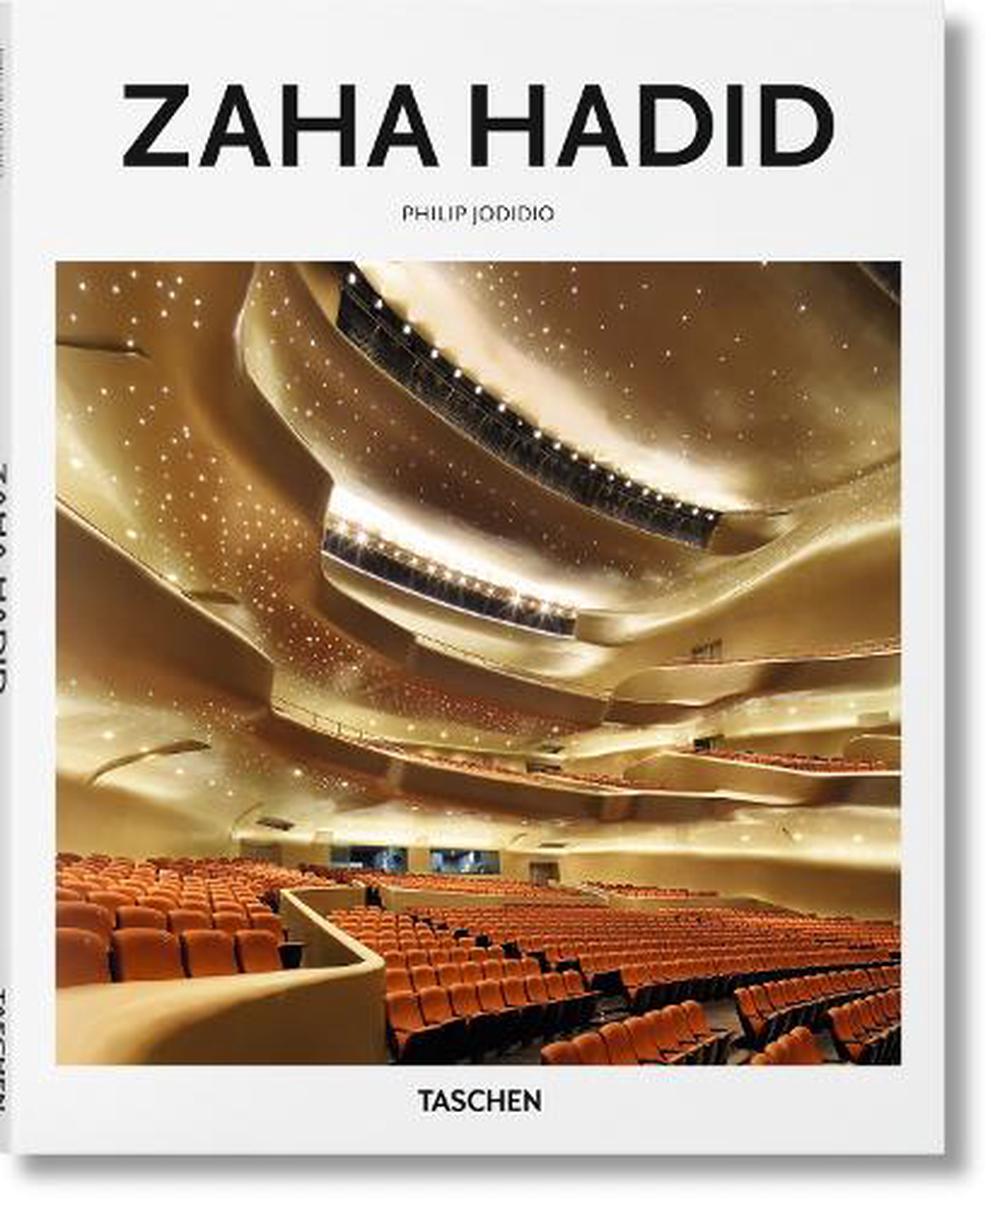 zaha hadid biography book